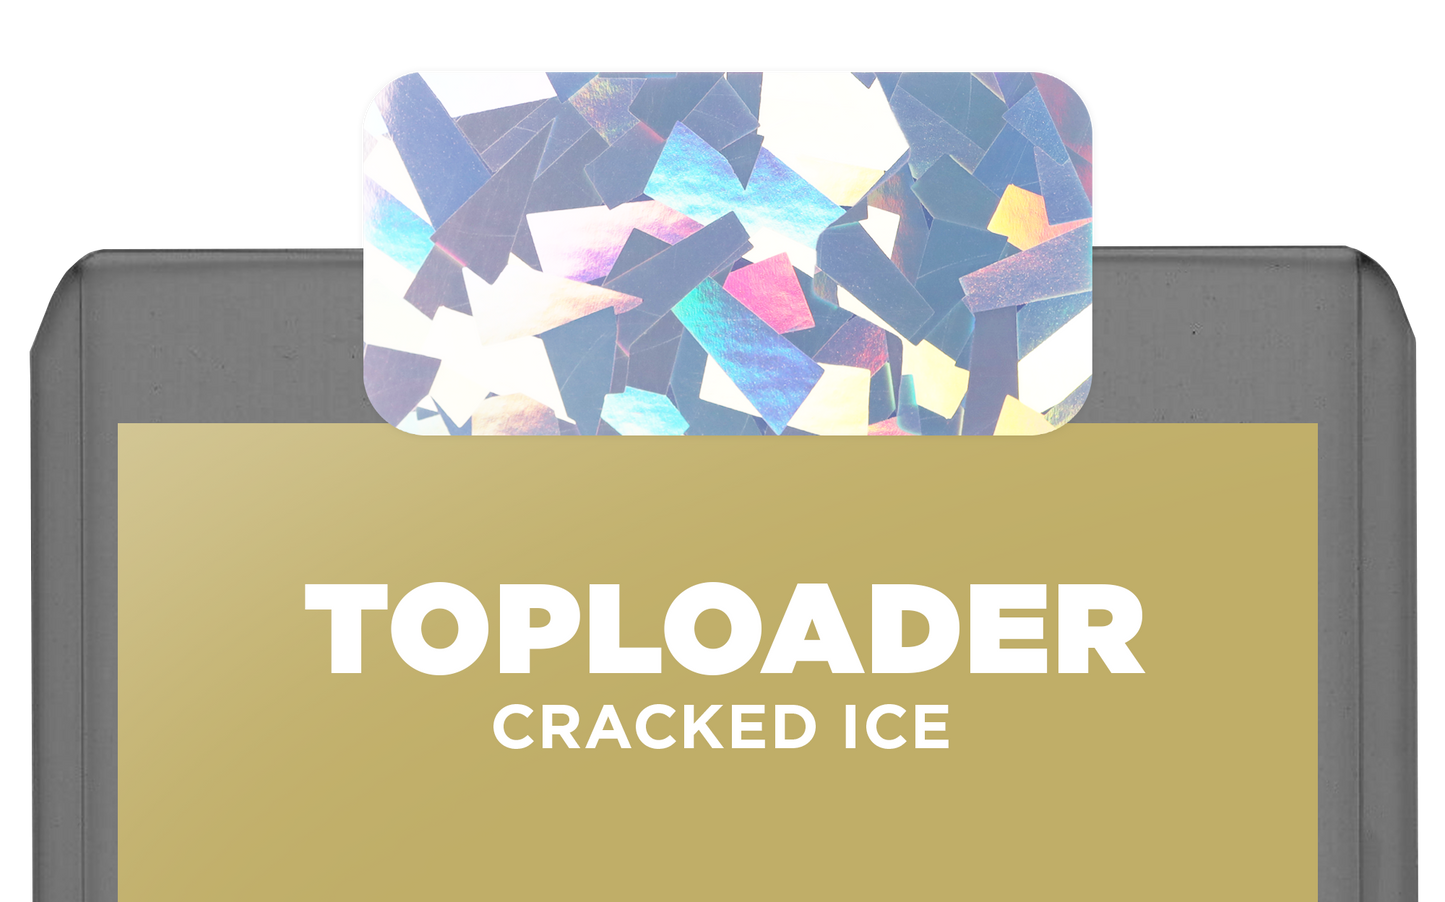 TOPLOADER CRACKED ICE